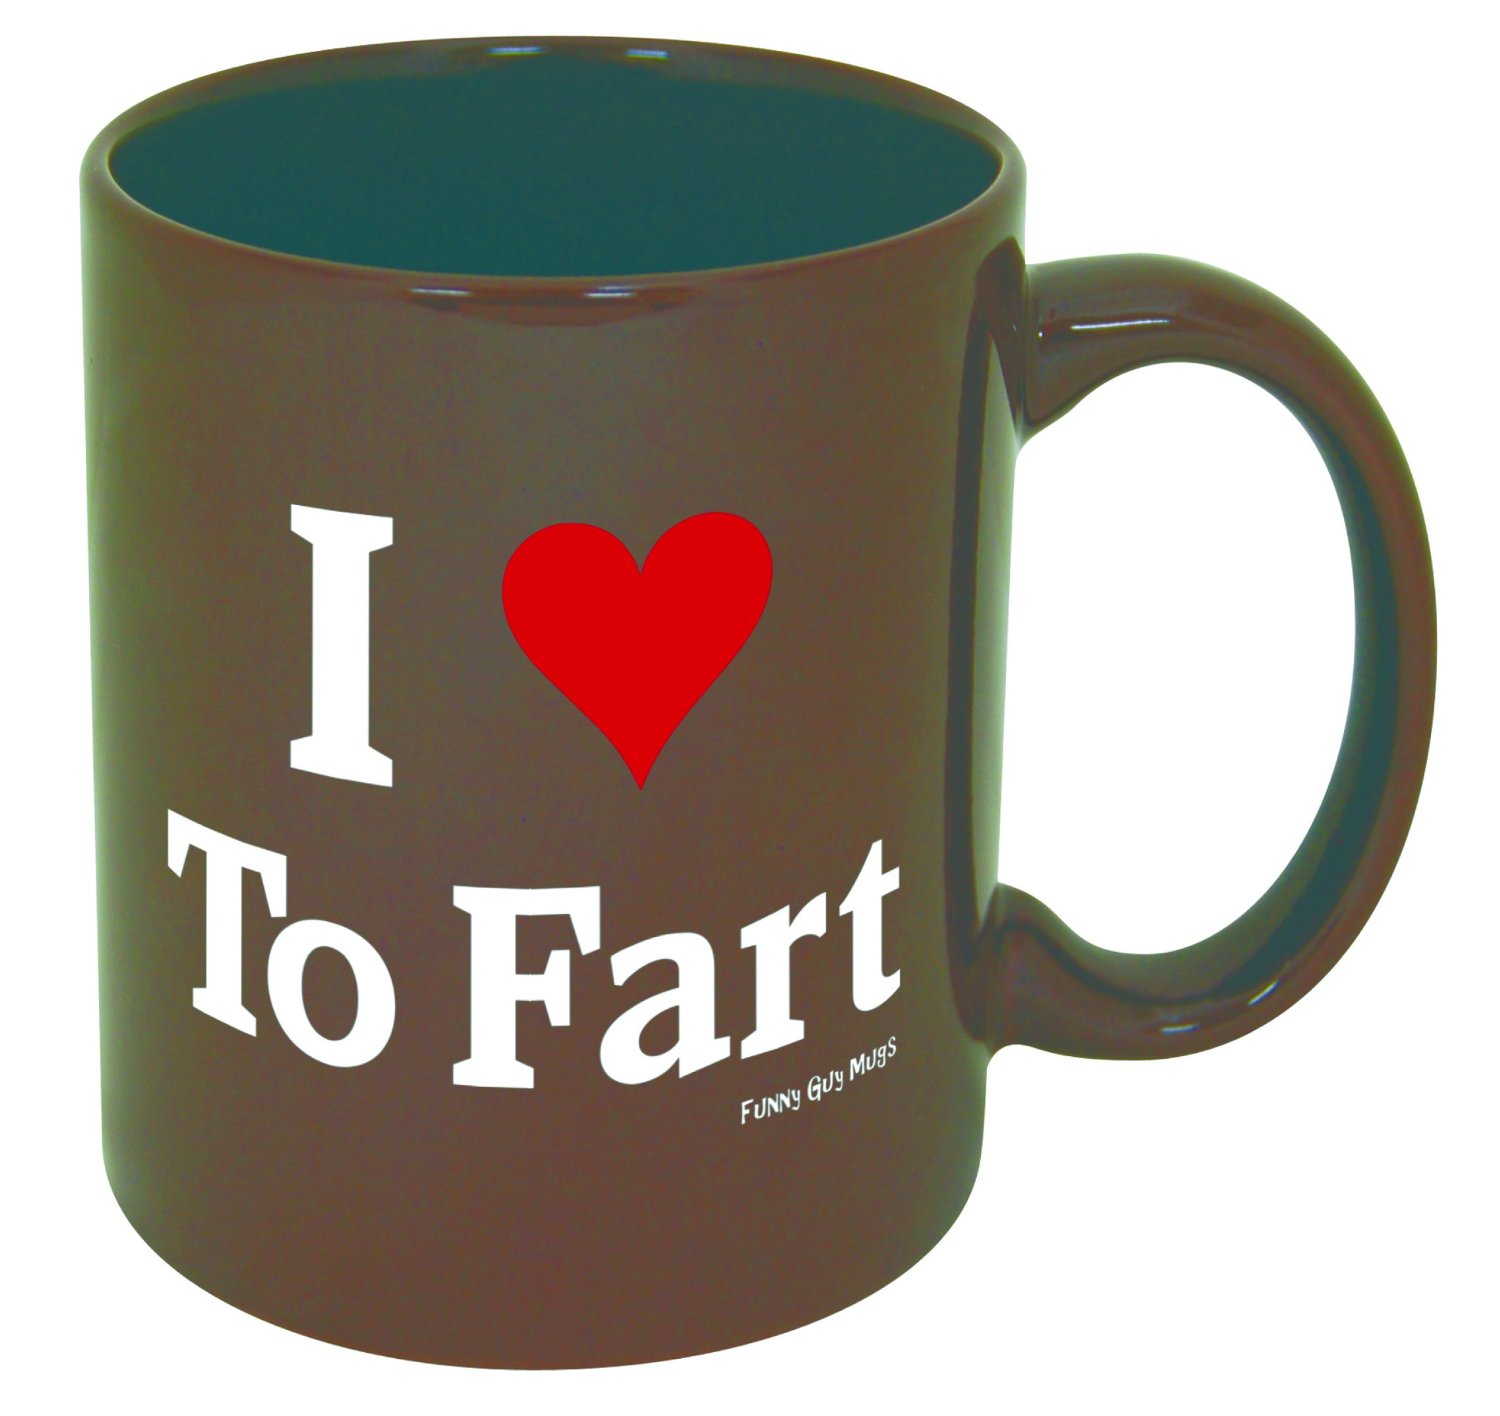 funny coffee mugs and mugs with quotes: Novelty fun coffee mug gift : I